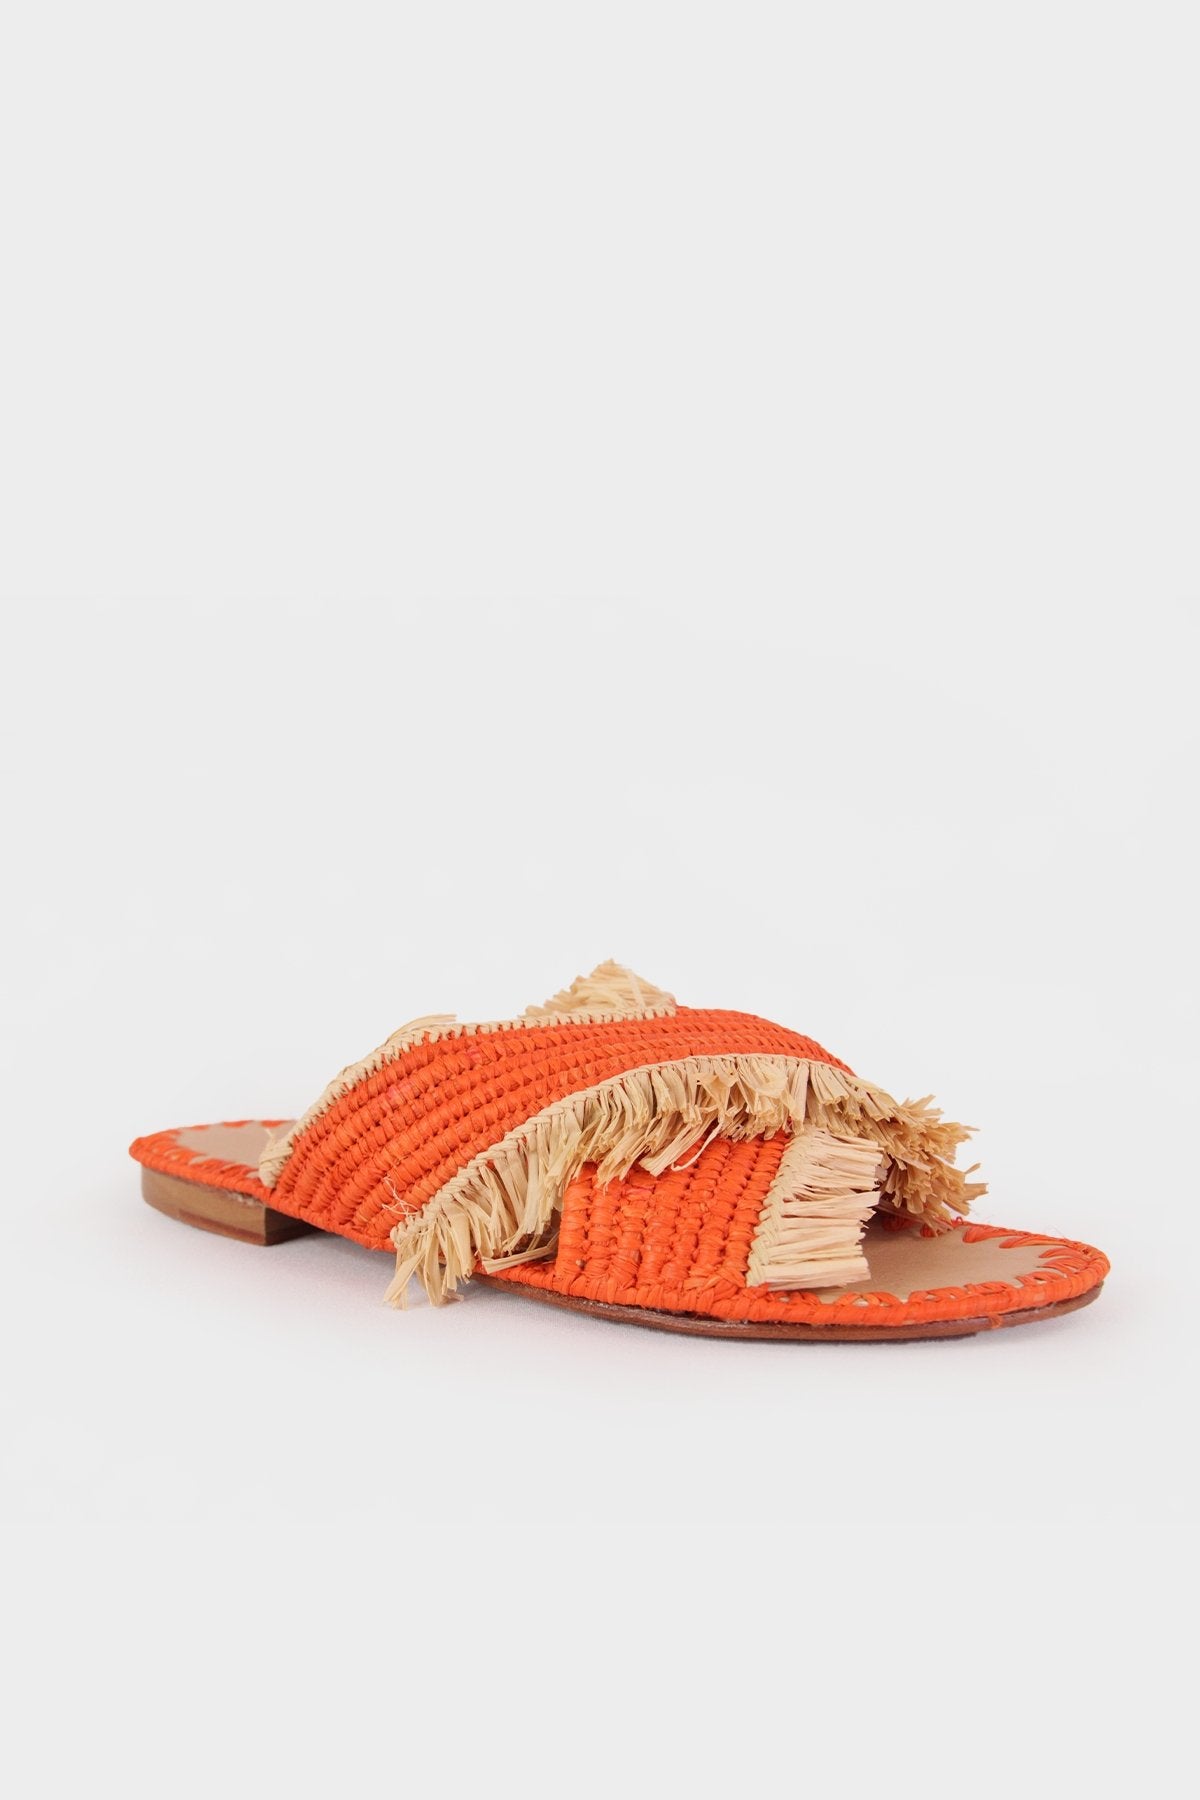 Raffia Rope Cross Strap Flat Sandals in Orange - shop-olivia.com